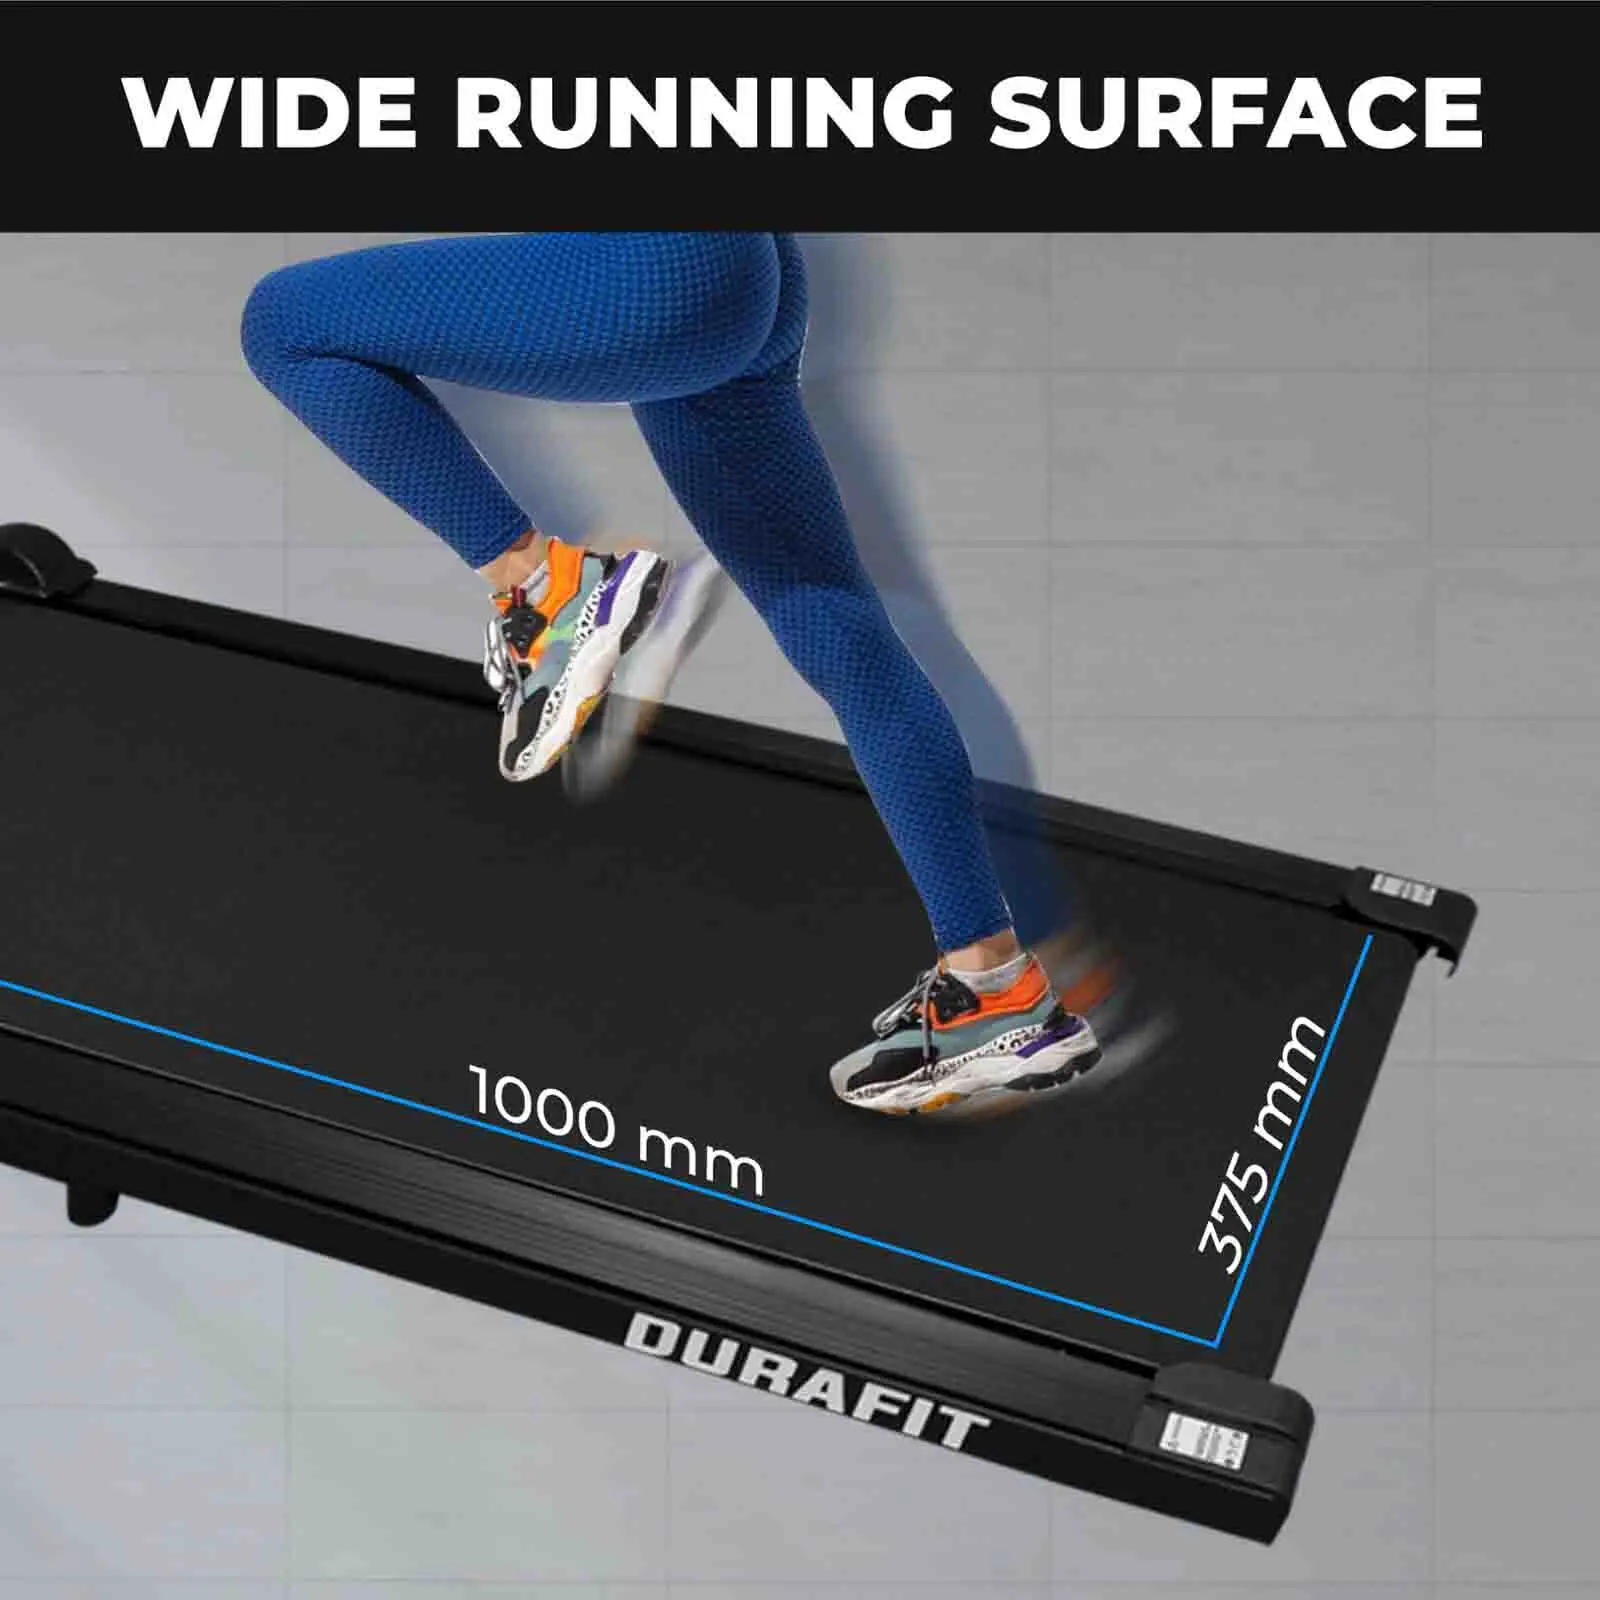 Durafit Compact Black Treadmill